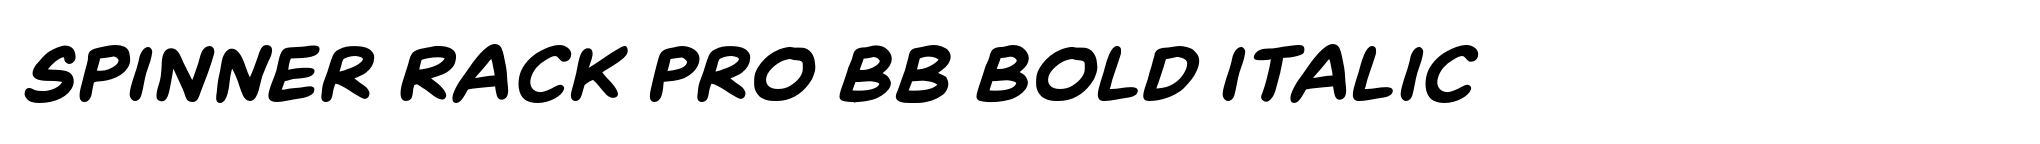 Spinner Rack Pro BB Bold Italic image